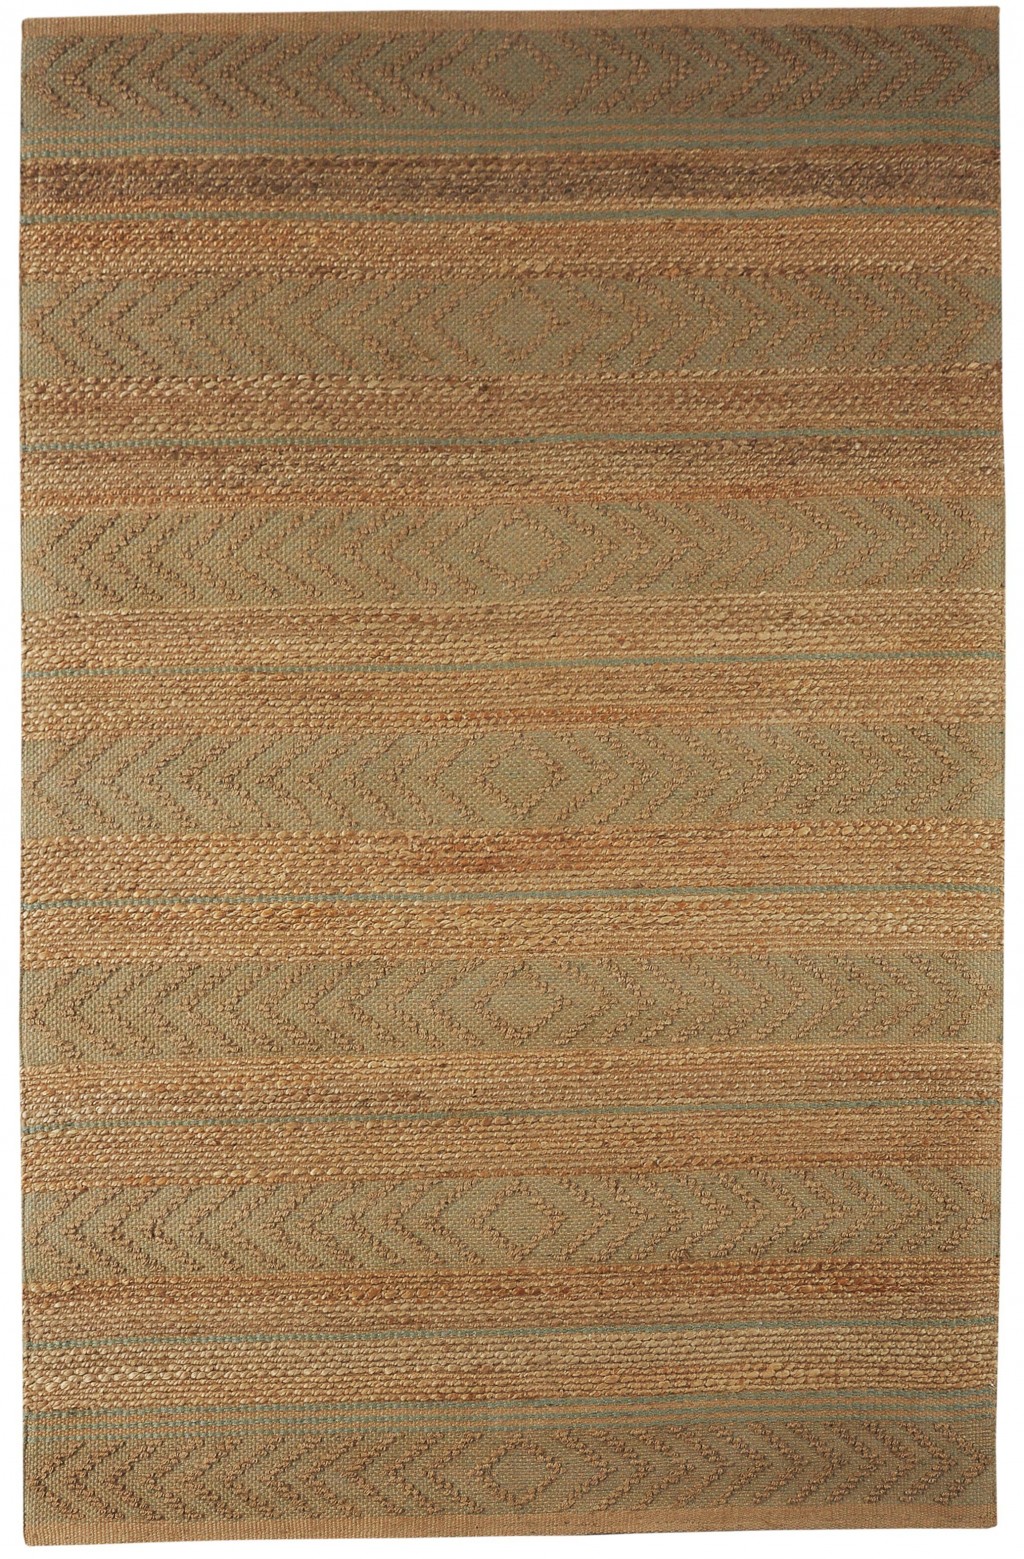 8’ x 10’ Seafoam and Tan Bohemian Striped Area Rug-395609-1